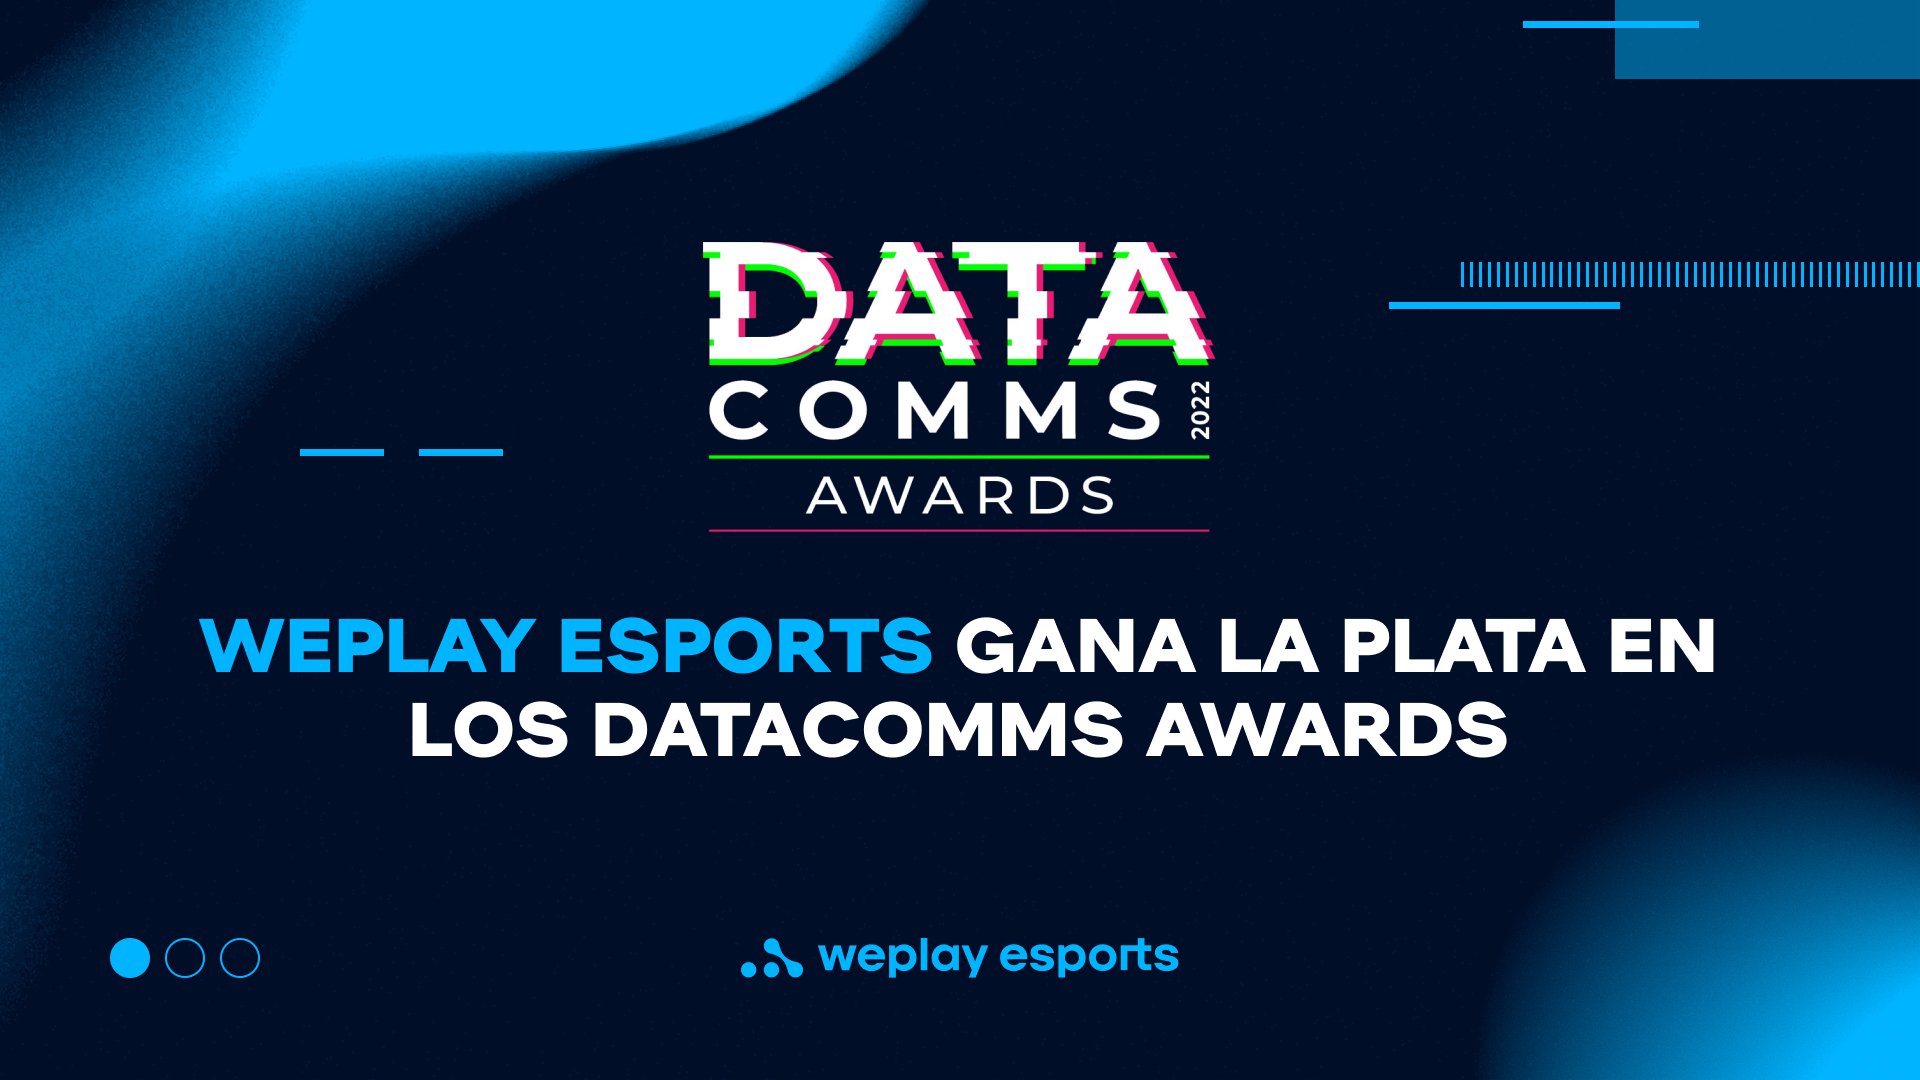 WePlay Esports gana la plata en los DataComms Awards. Imagen: WePlay Holding